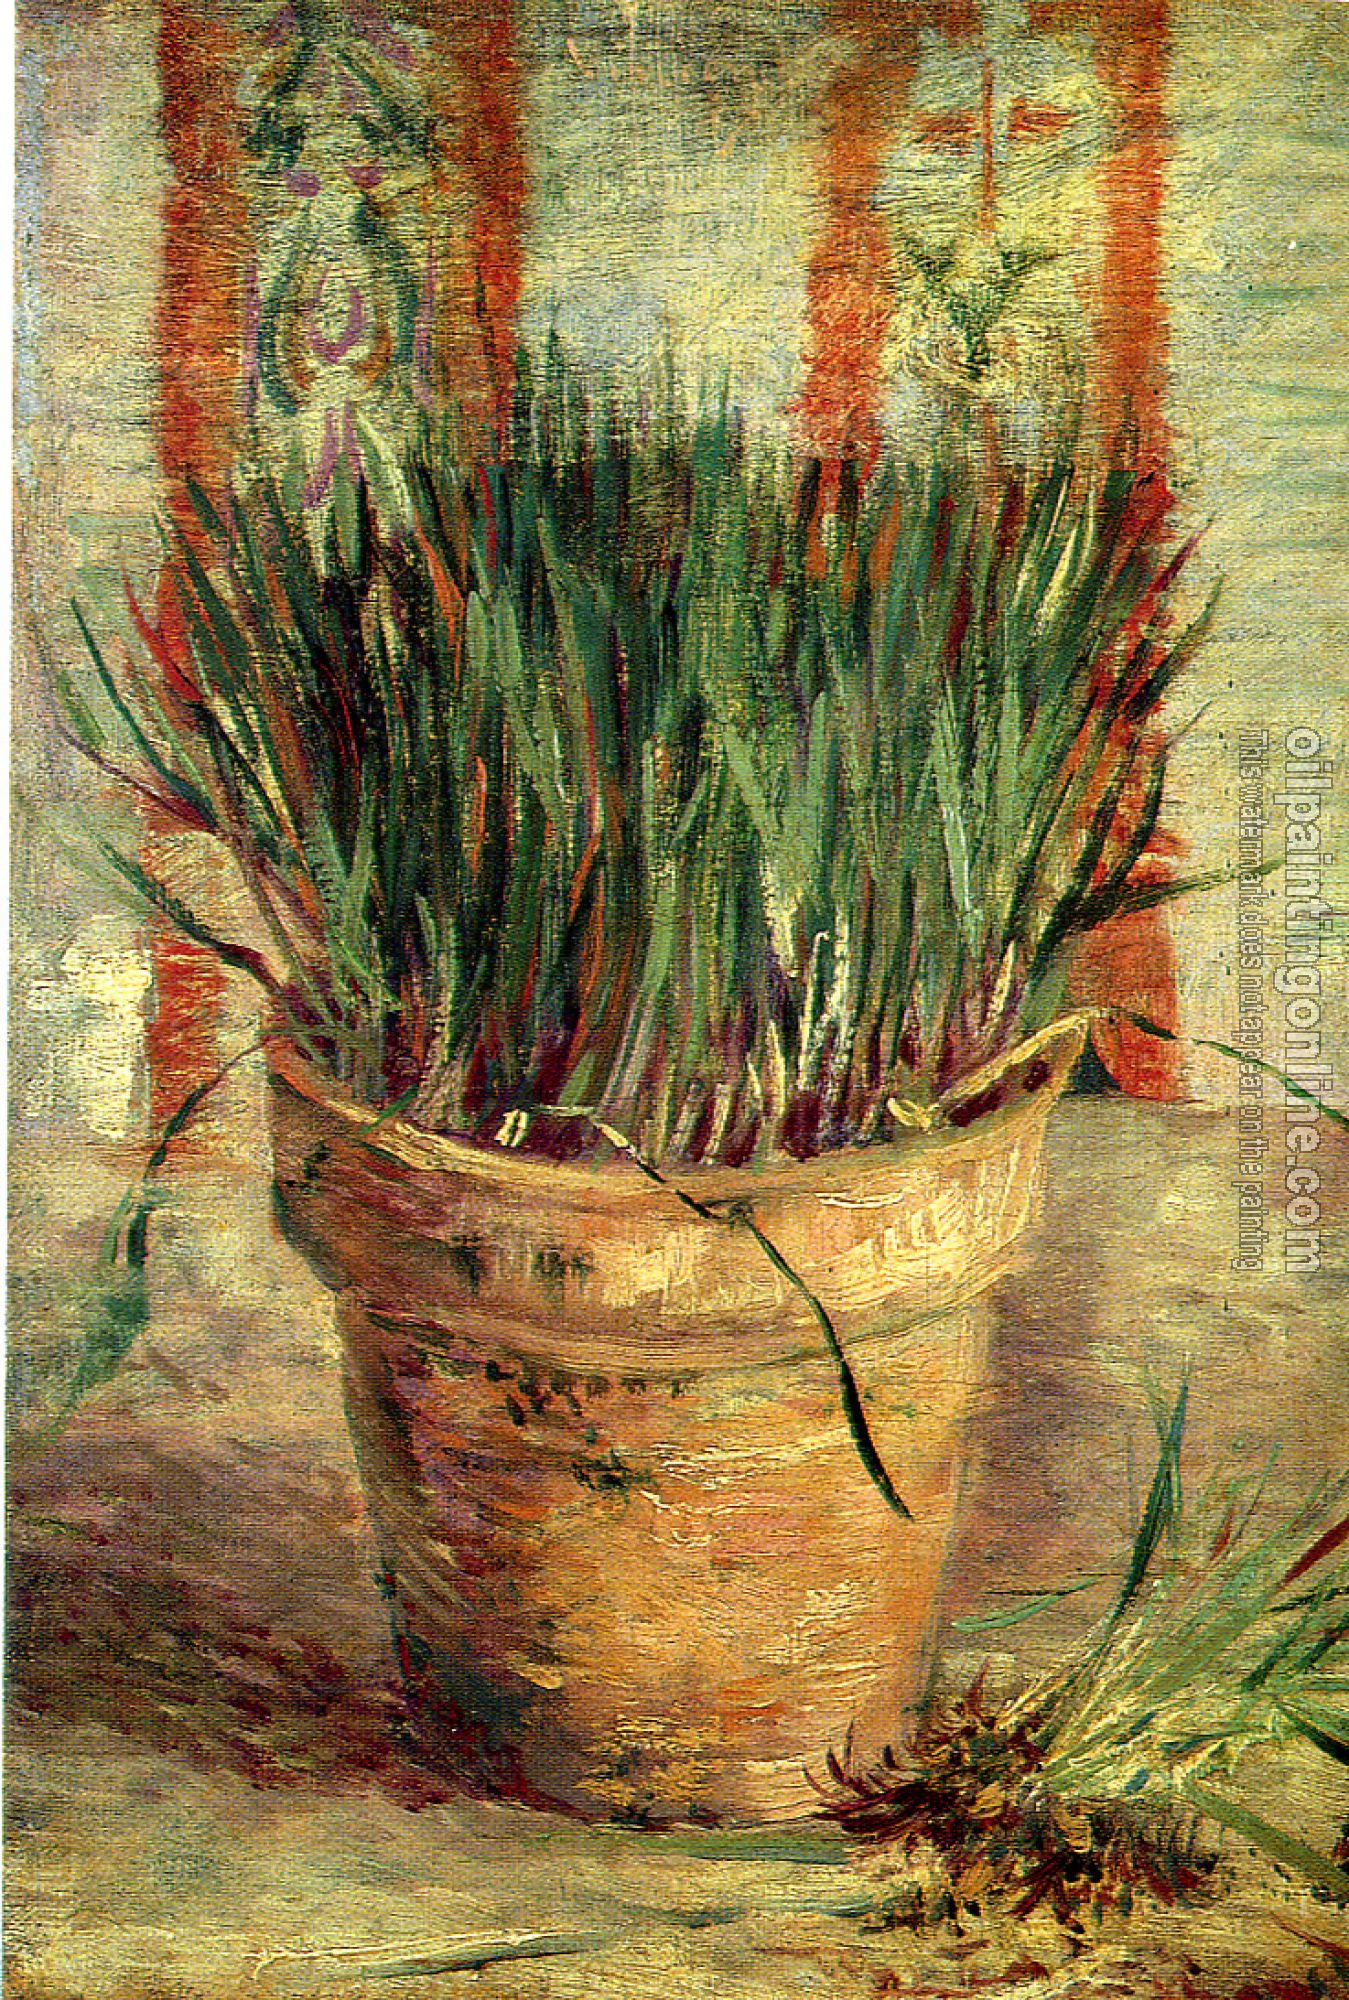 Gogh, Vincent van - Flowerpot with Chives